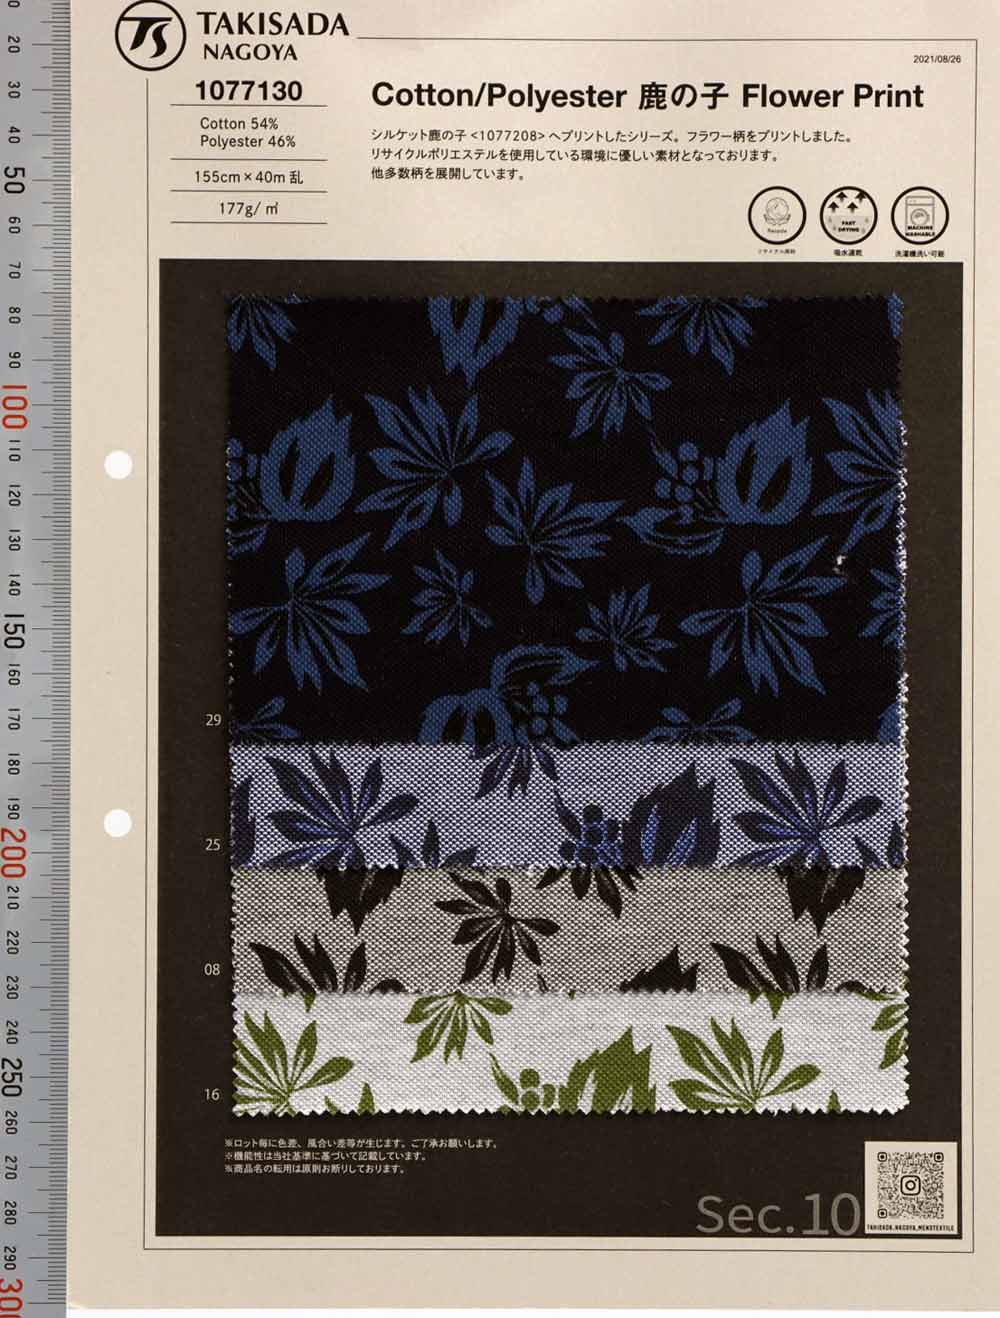 1077130 TC Moss Stitch Blumendruck[Textilgewebe] Takisada Nagoya